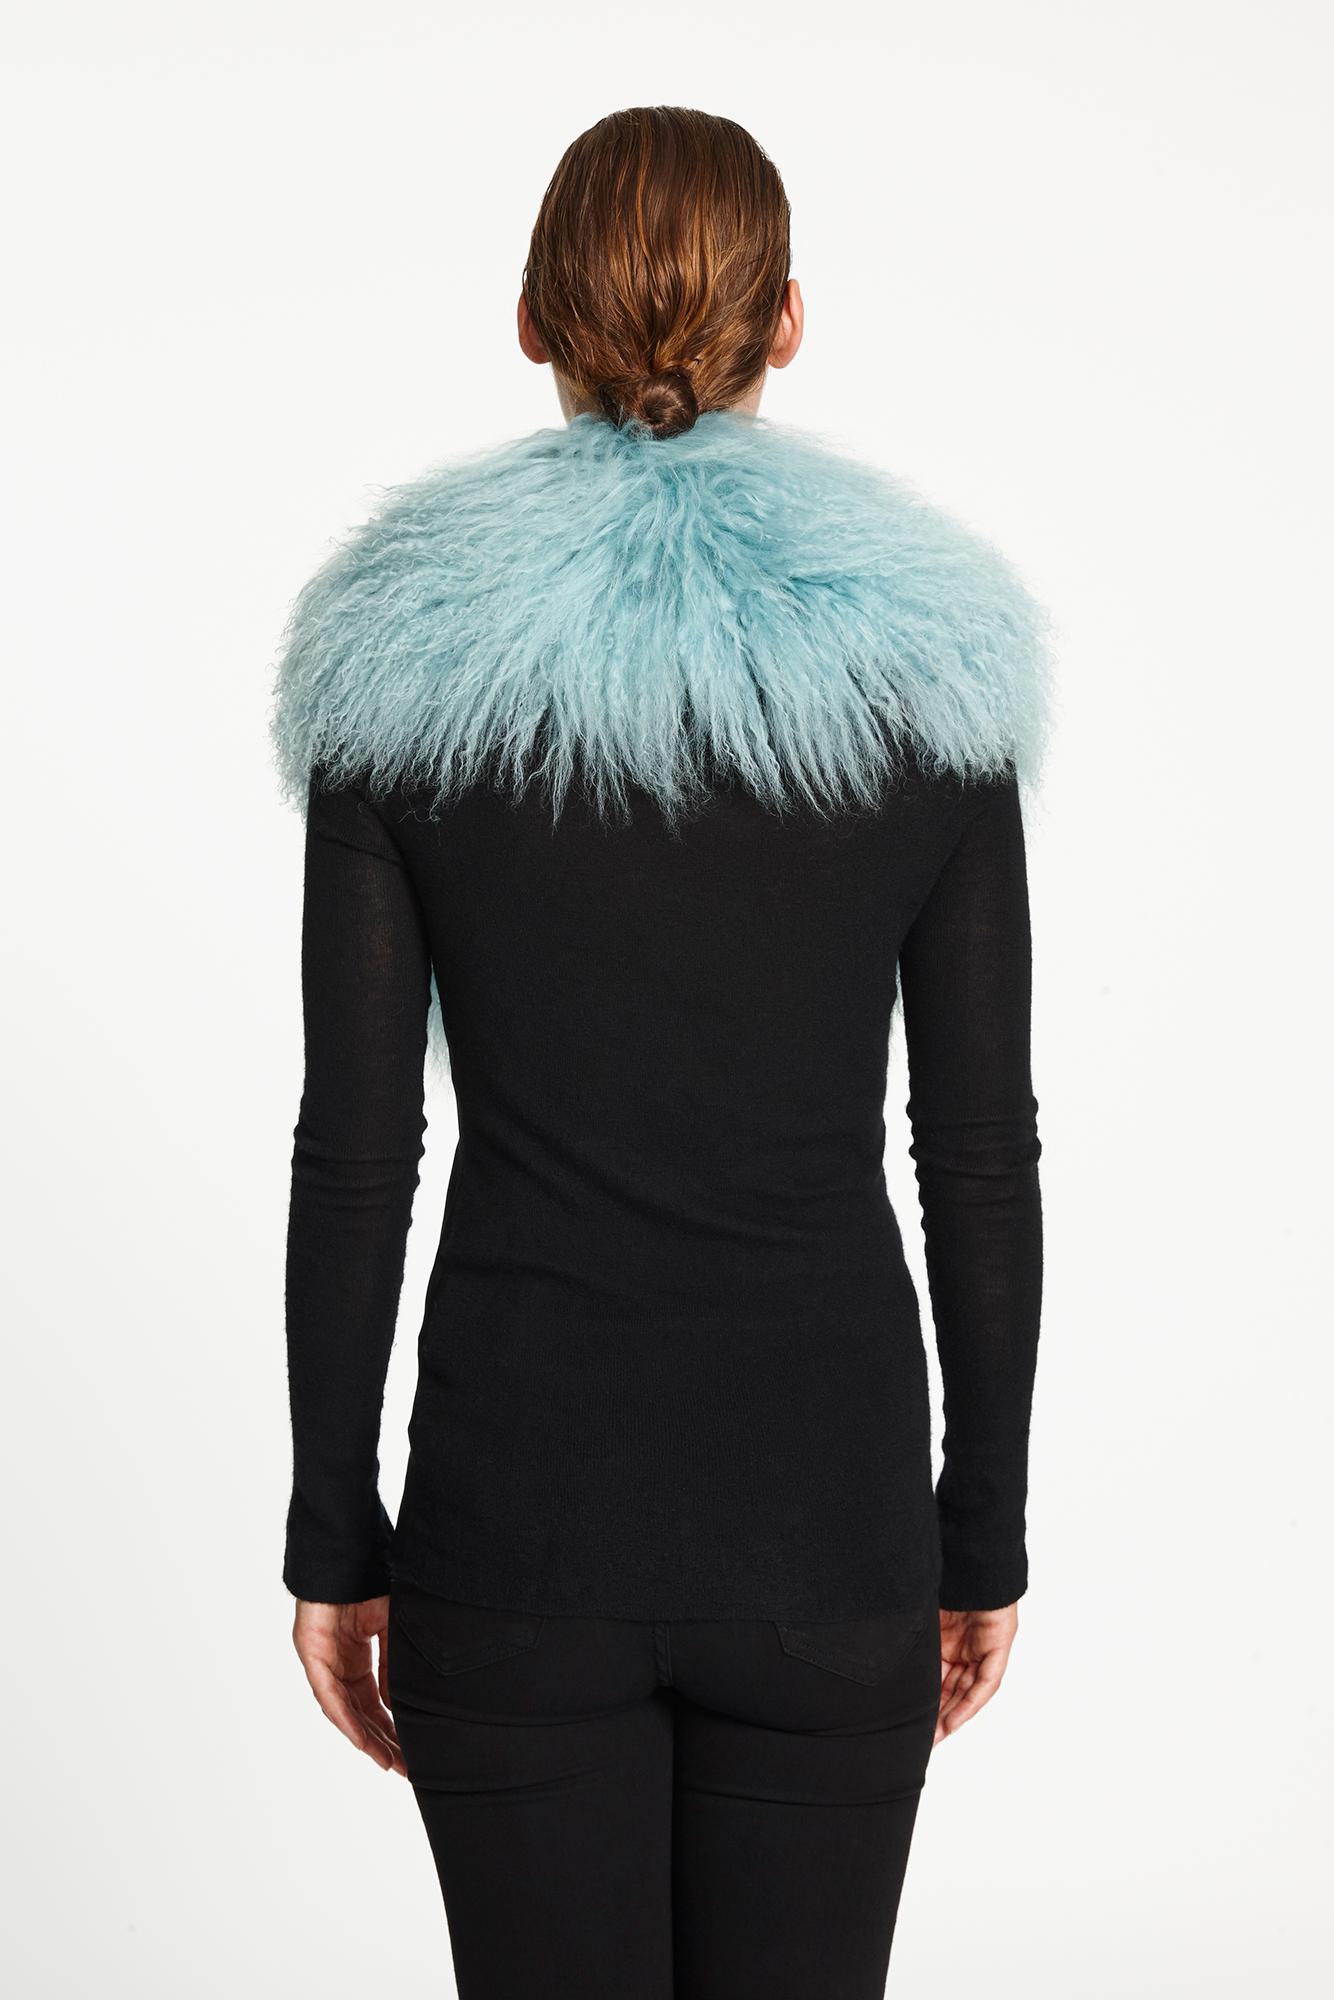 Verheyen London Shawl Collar in Aquamarine Blue Mongolian Lamb Fur  - Brand New  3